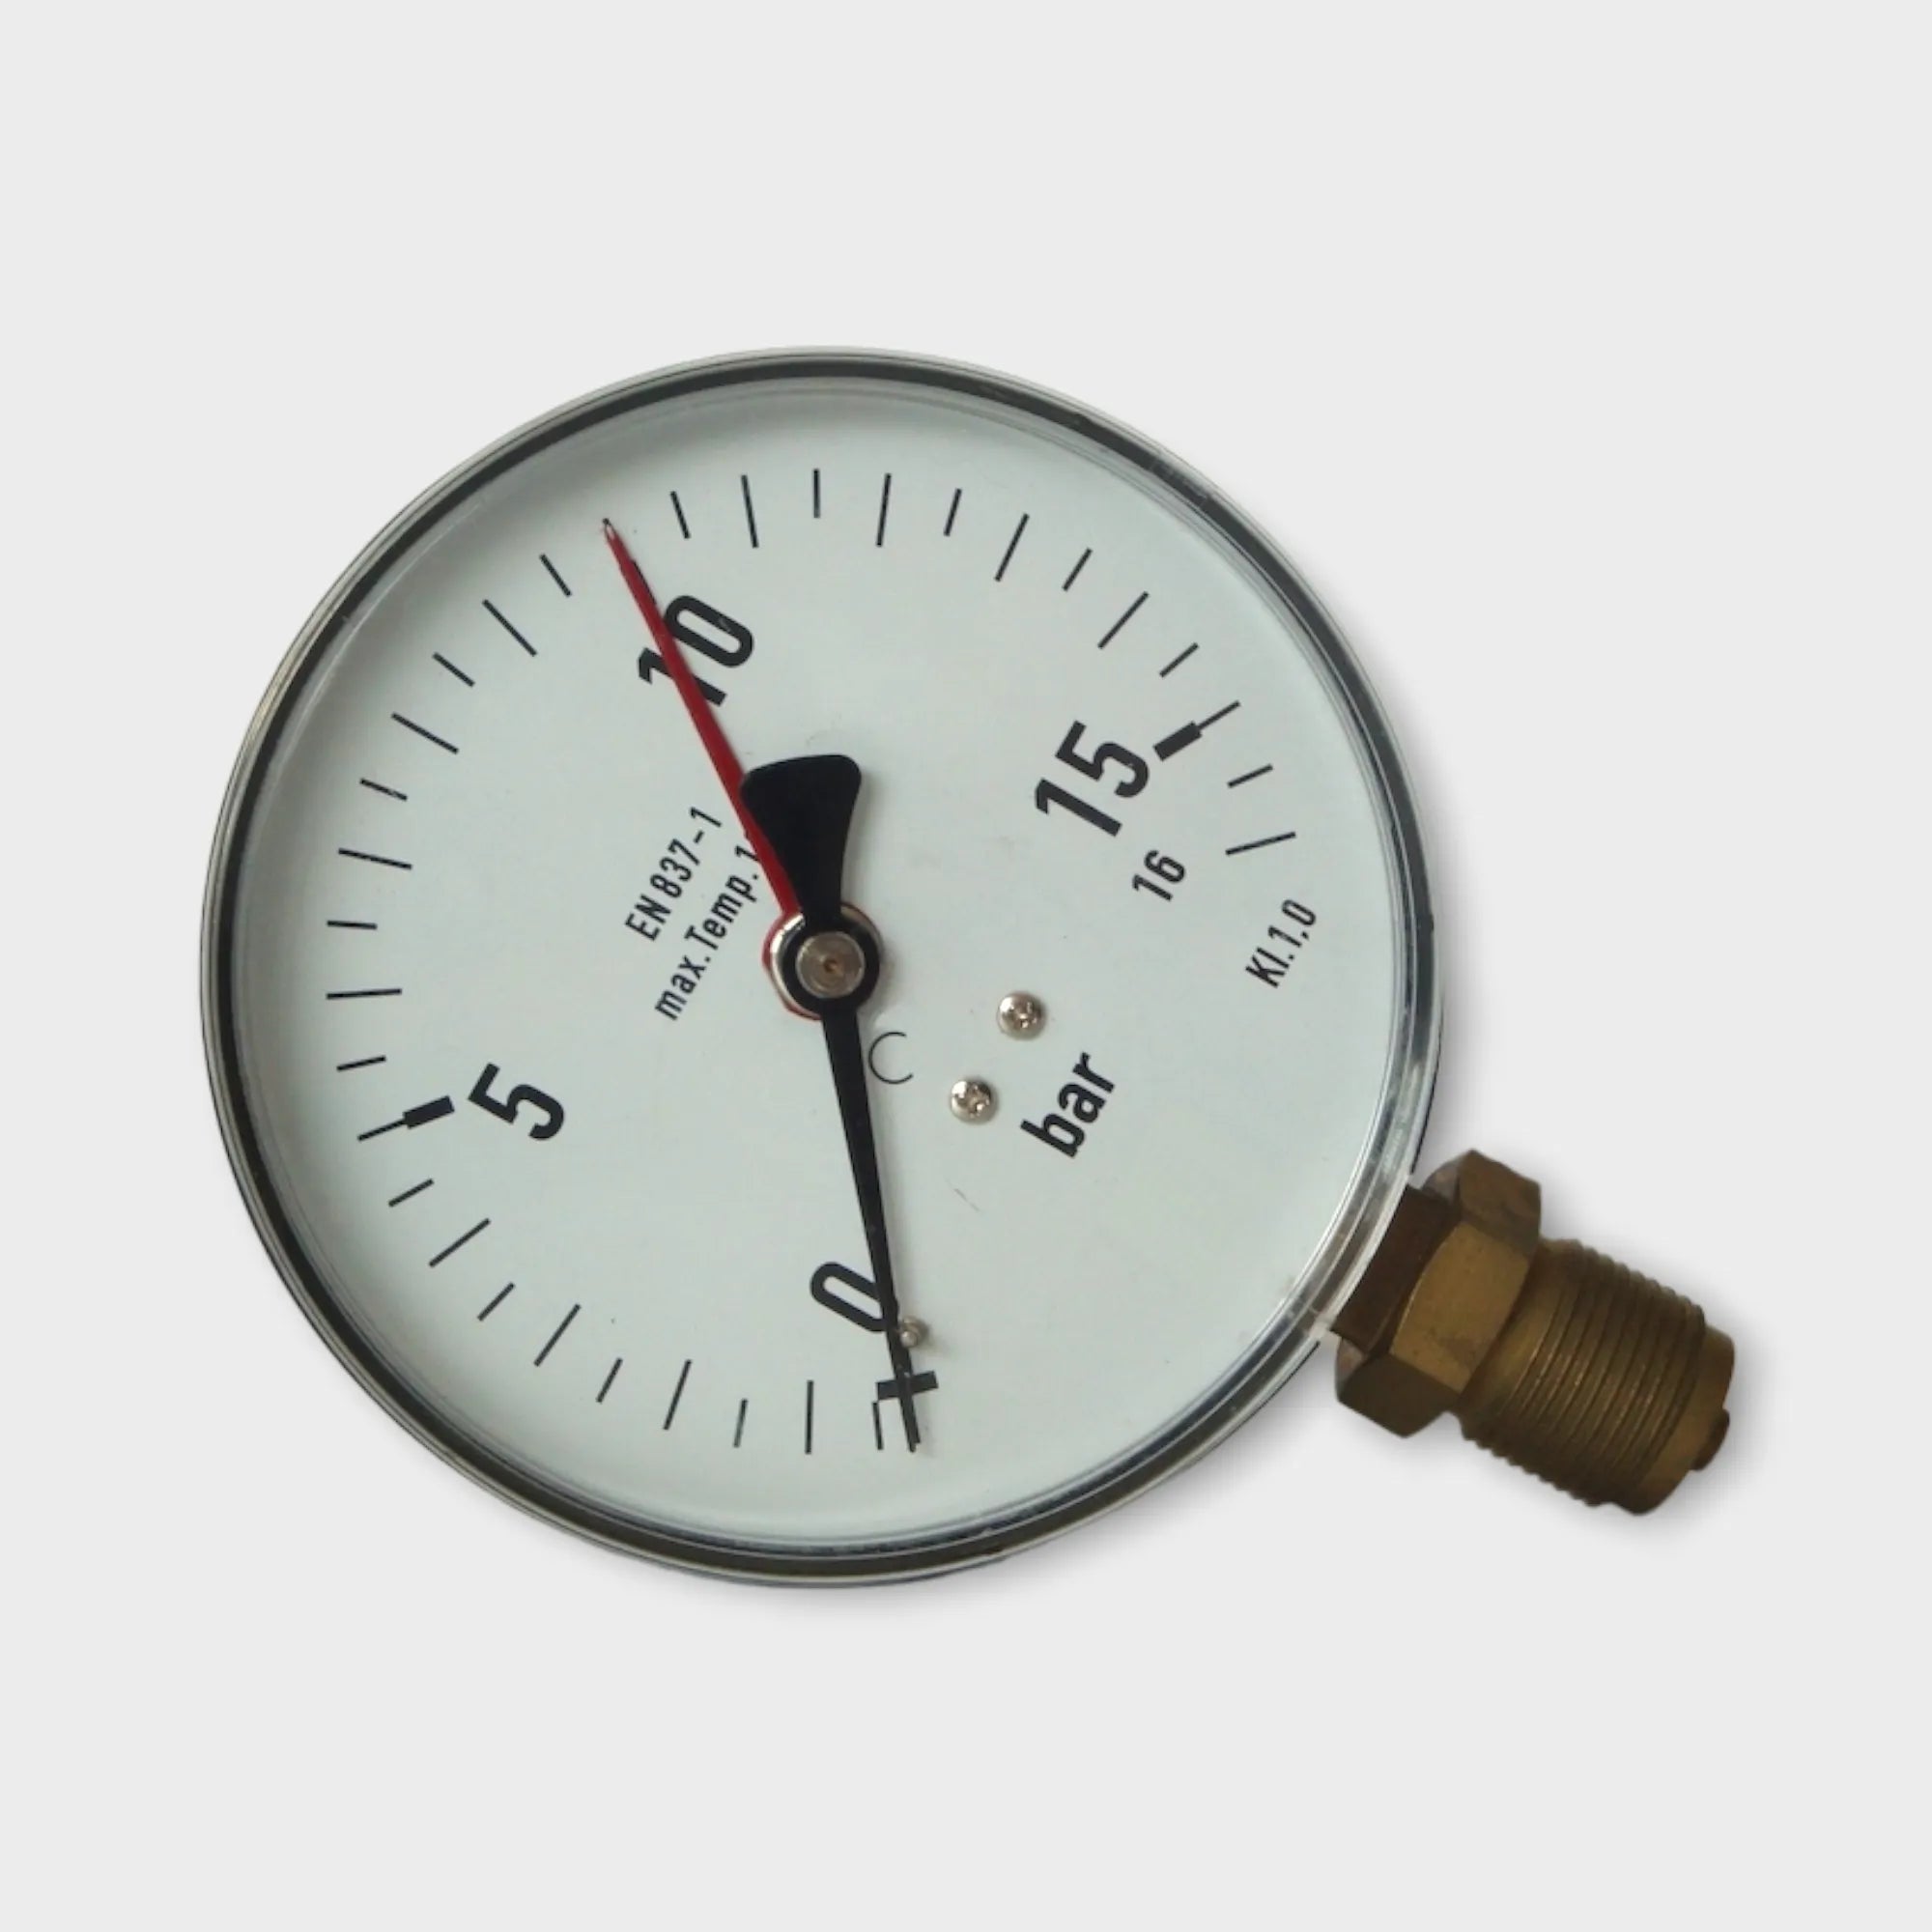 Manomètre Bourdon pression relative petit cadran 40 50 63 80 mm